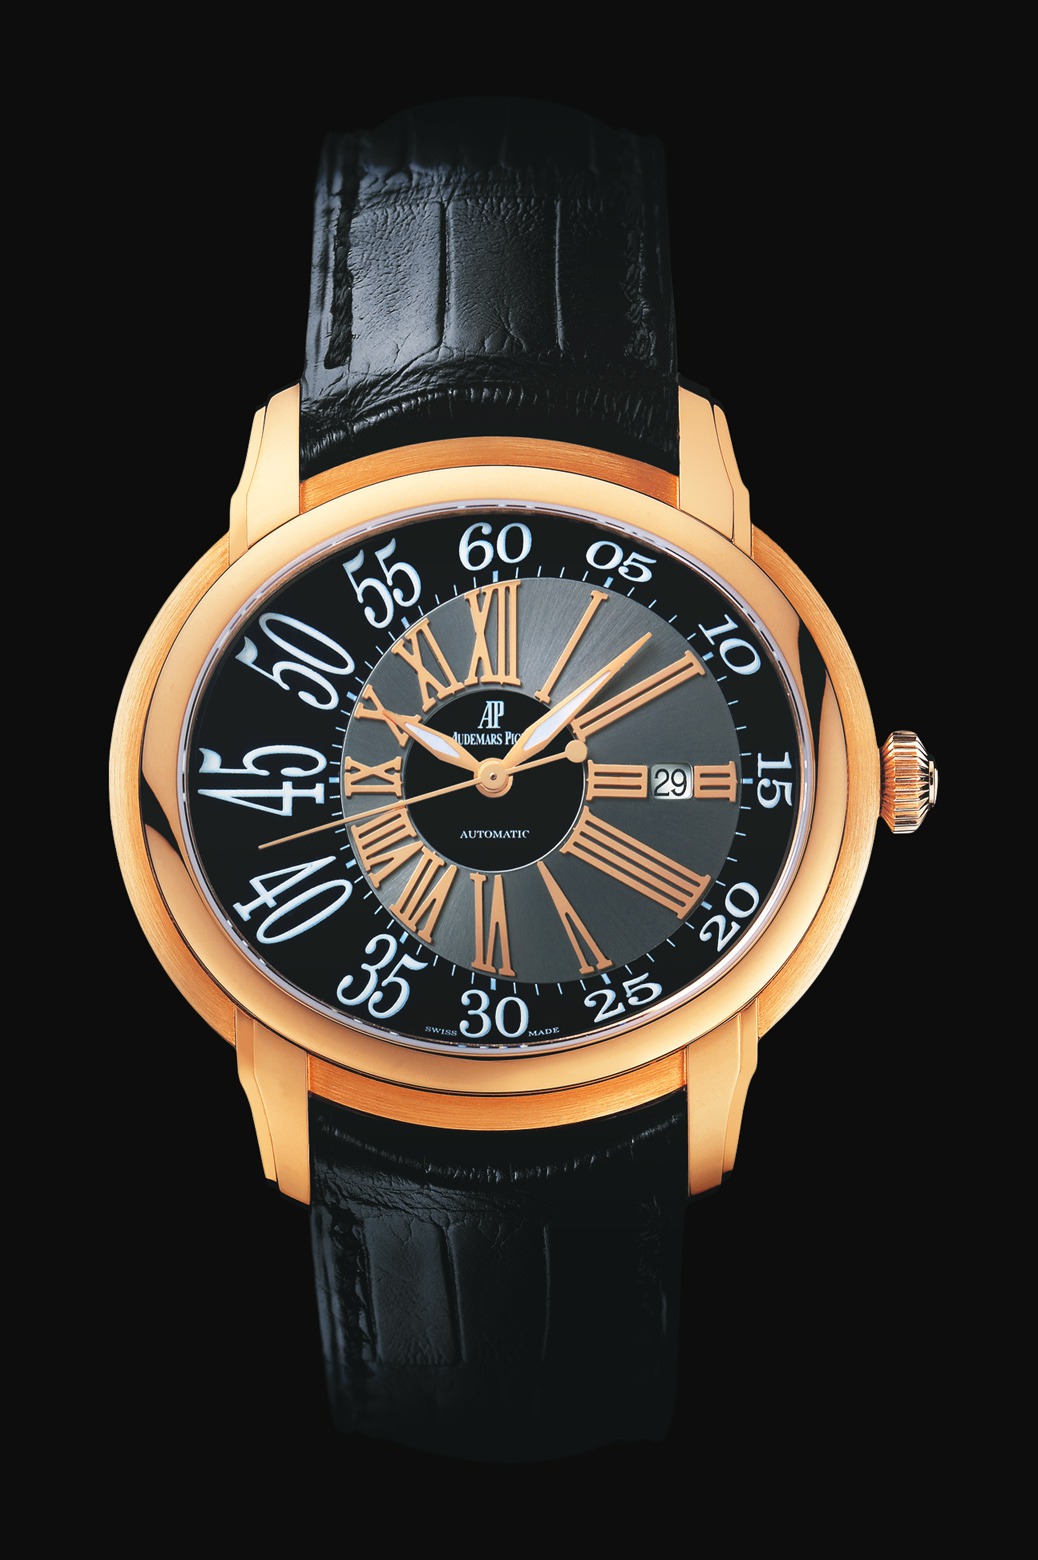 Audemars Piguet Millenary Automatic Pink Gold watch REF: 15320OR.OO.D002CR.01